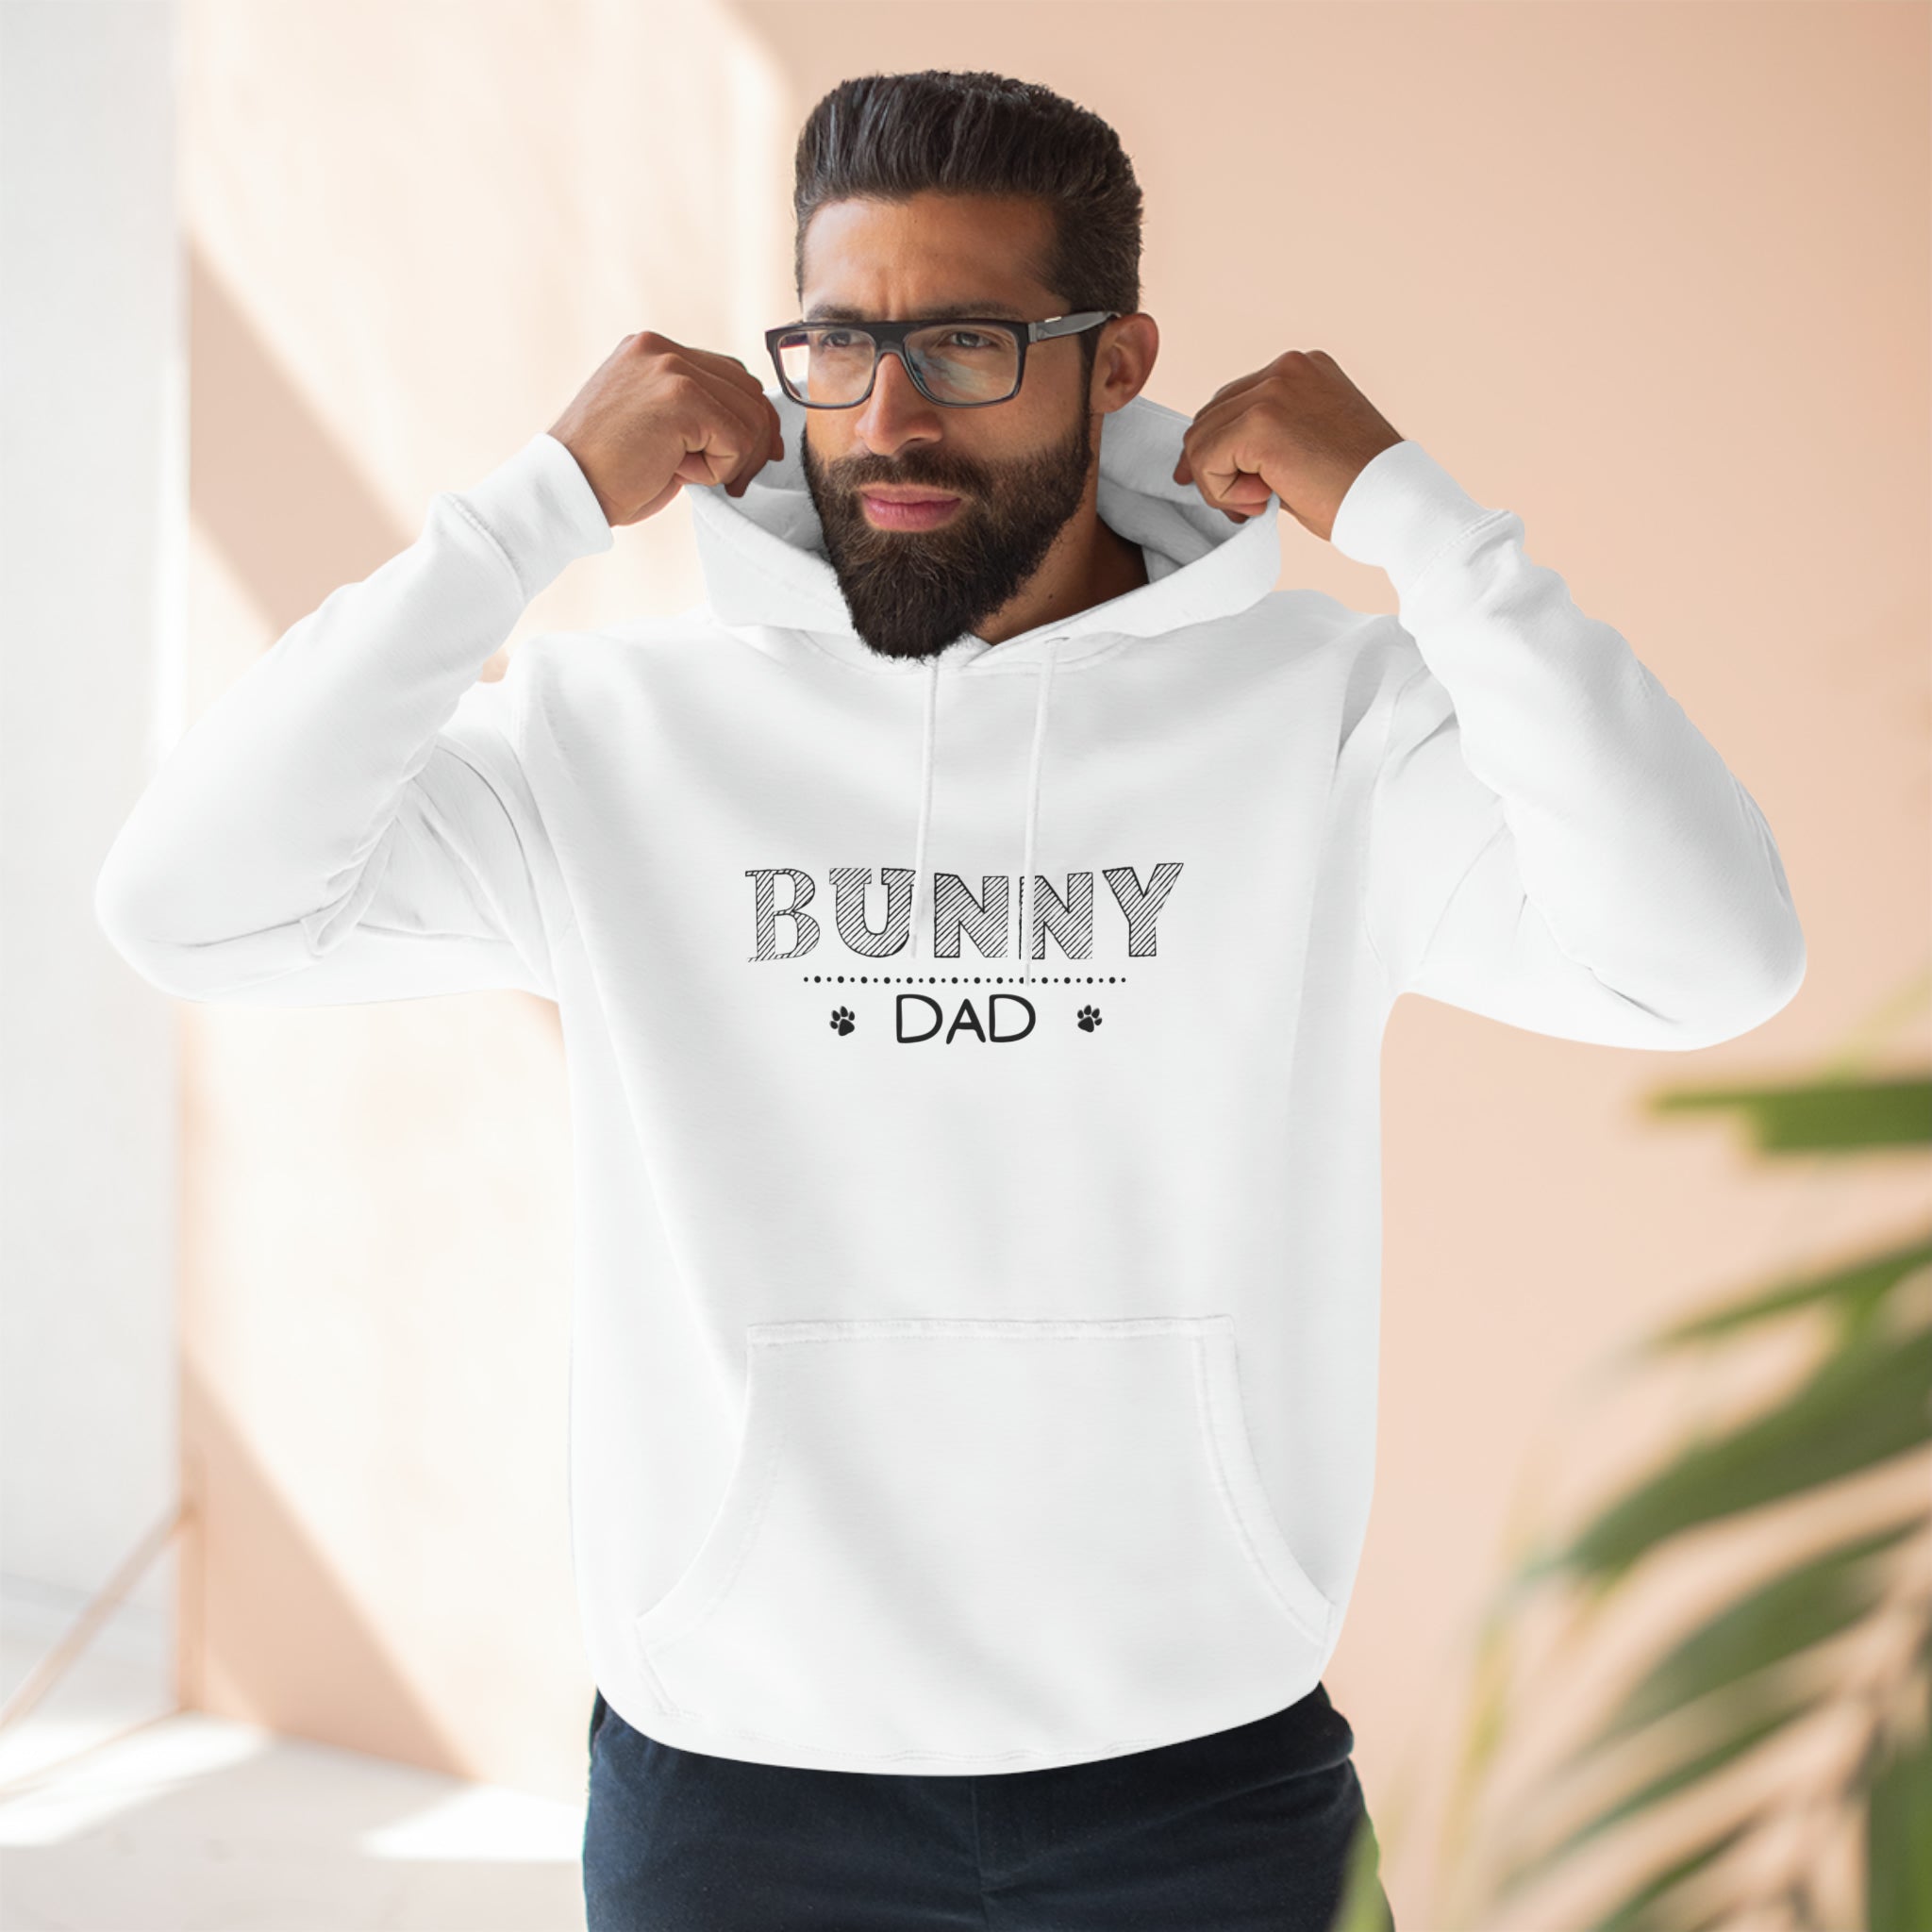 Bunny Dad Premium Pullover Hoodie